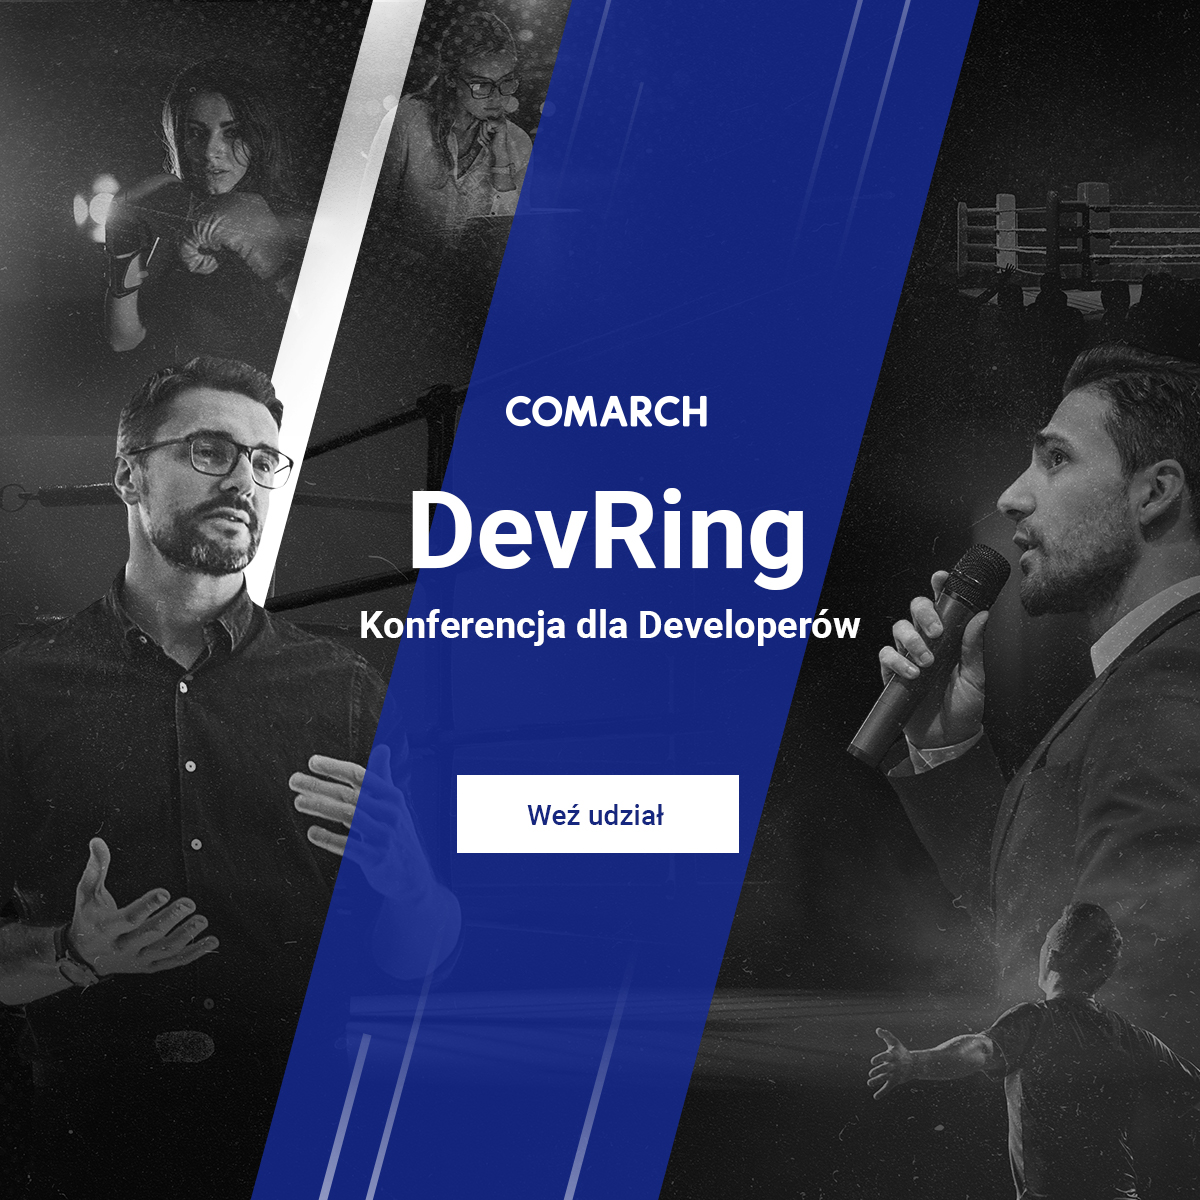 DevRing – konferencja dla front-end developerów w nowatorskiej formule